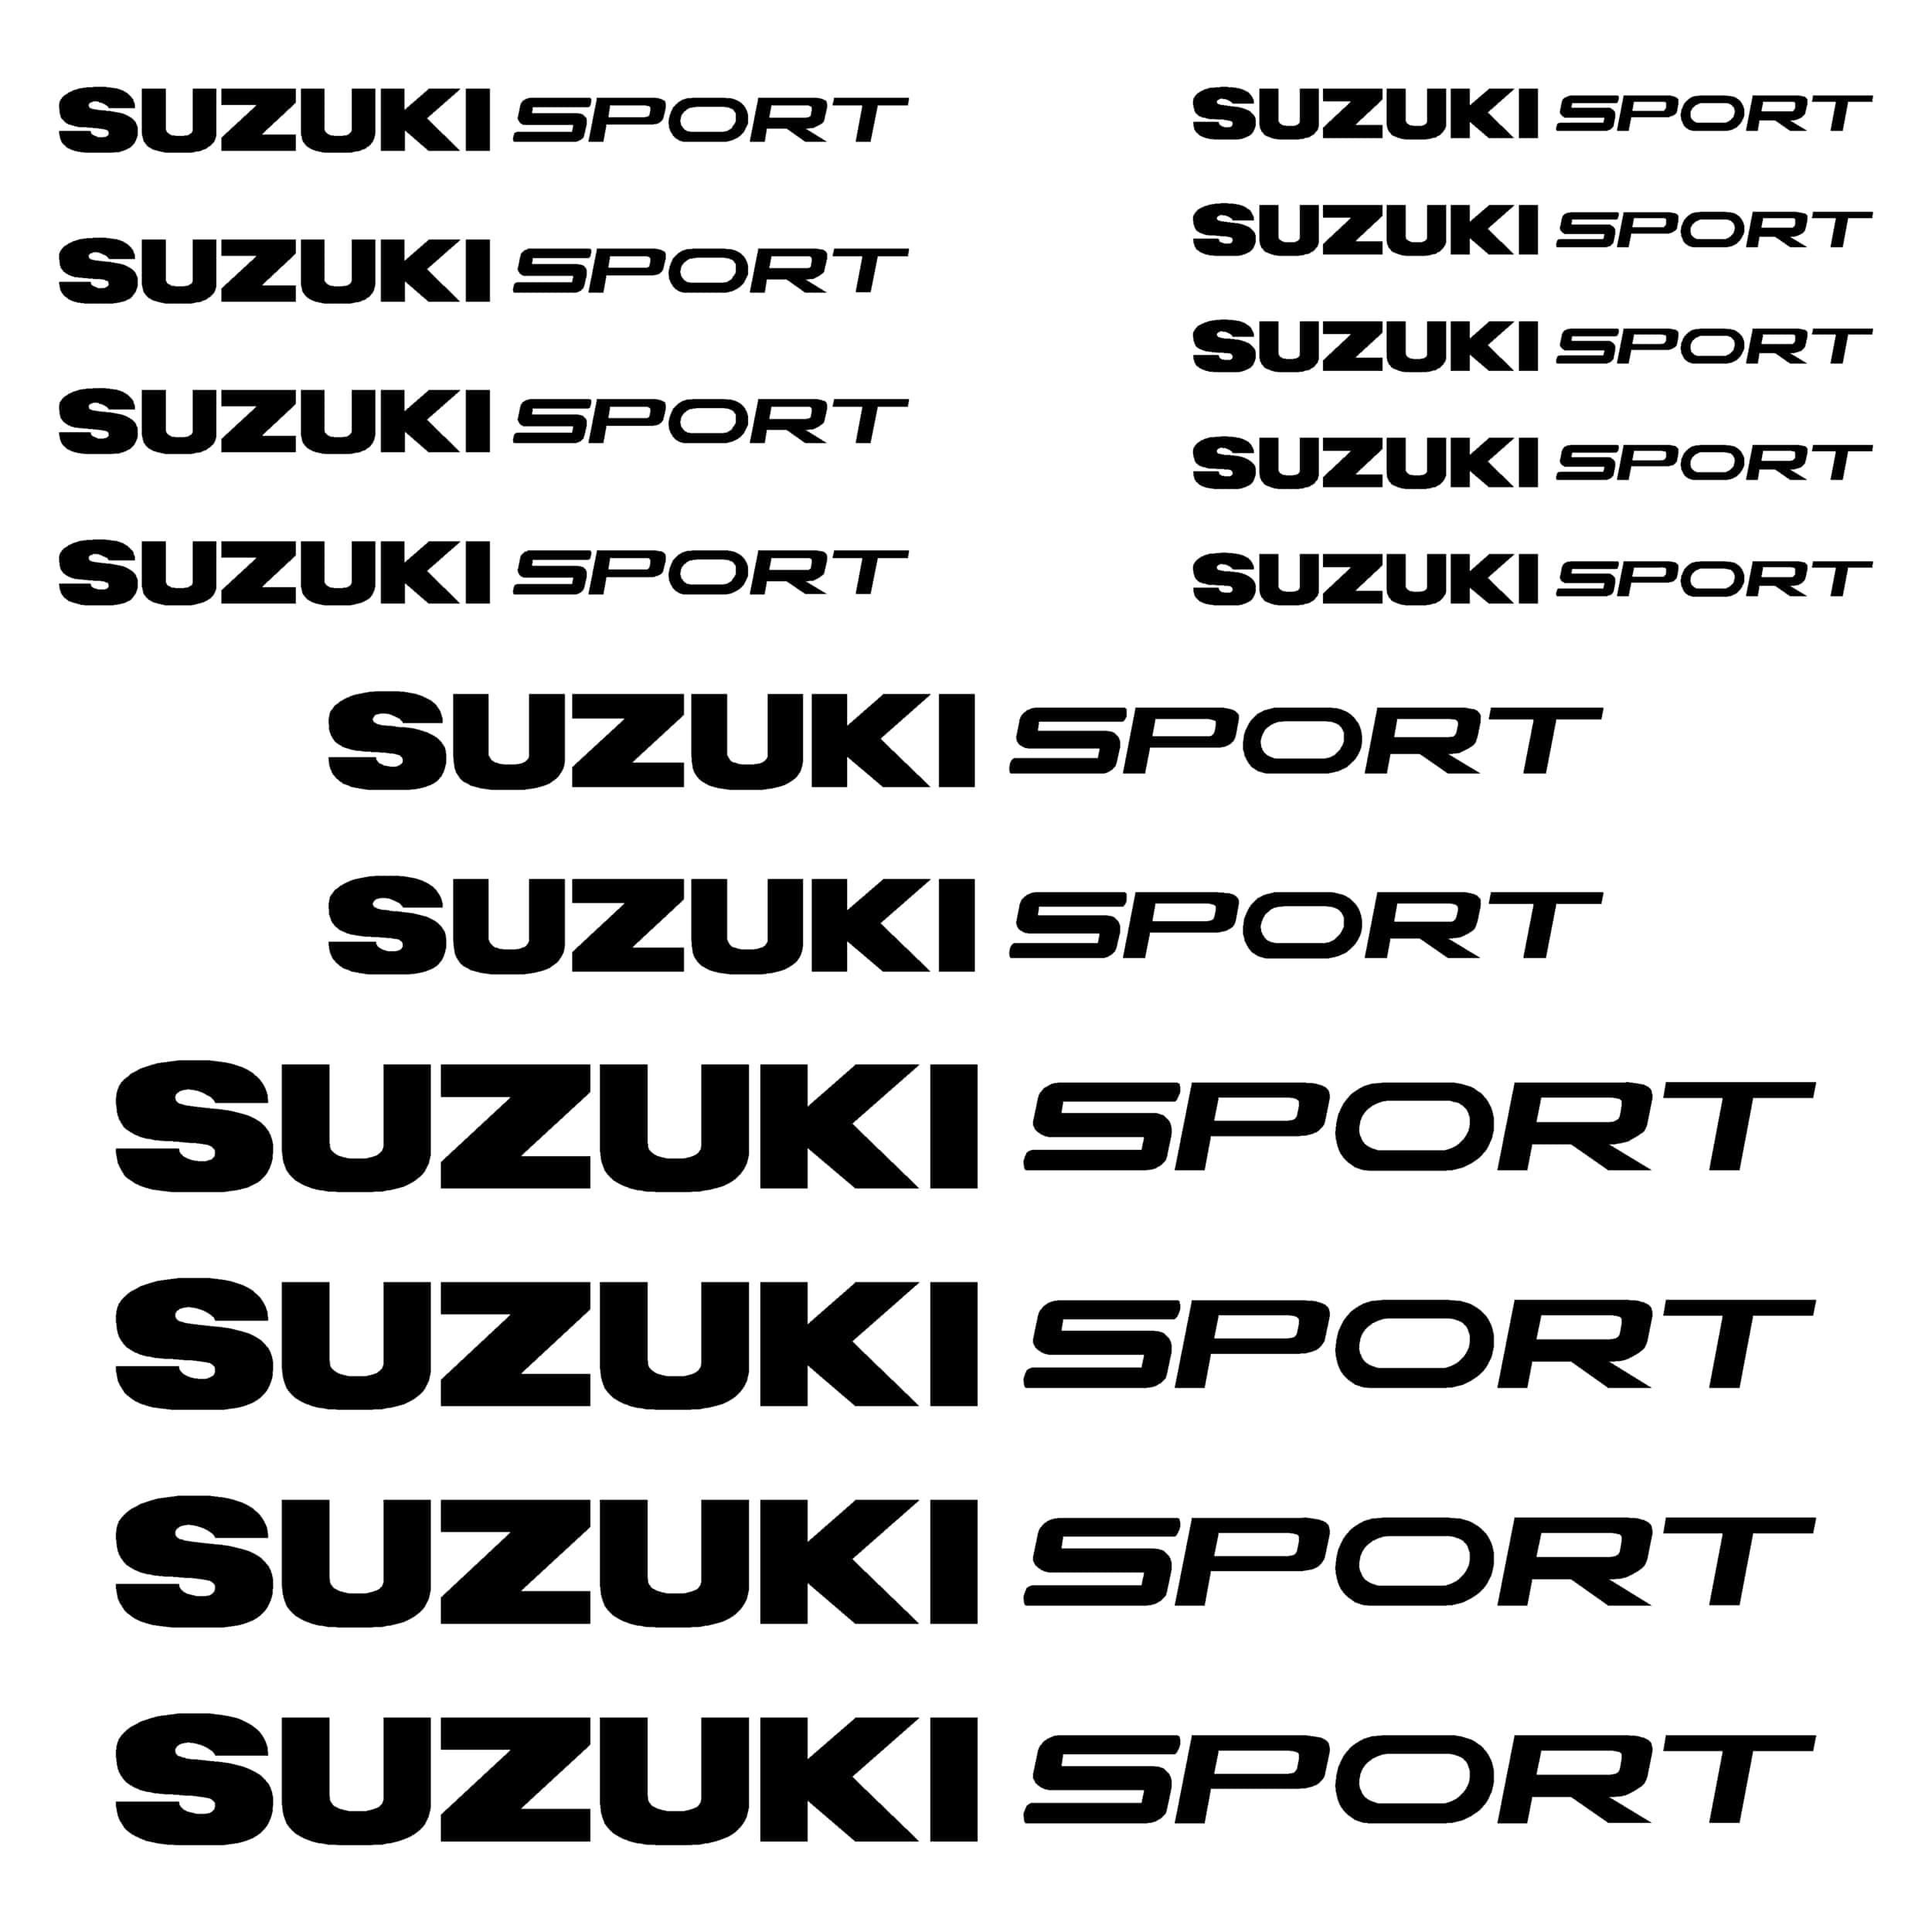 stickers-suzuki-sport-ref-1-tuning-audio-4x4-tout-terrain-car-auto-moto-camion-competition-deco-rallye-autocollant-min